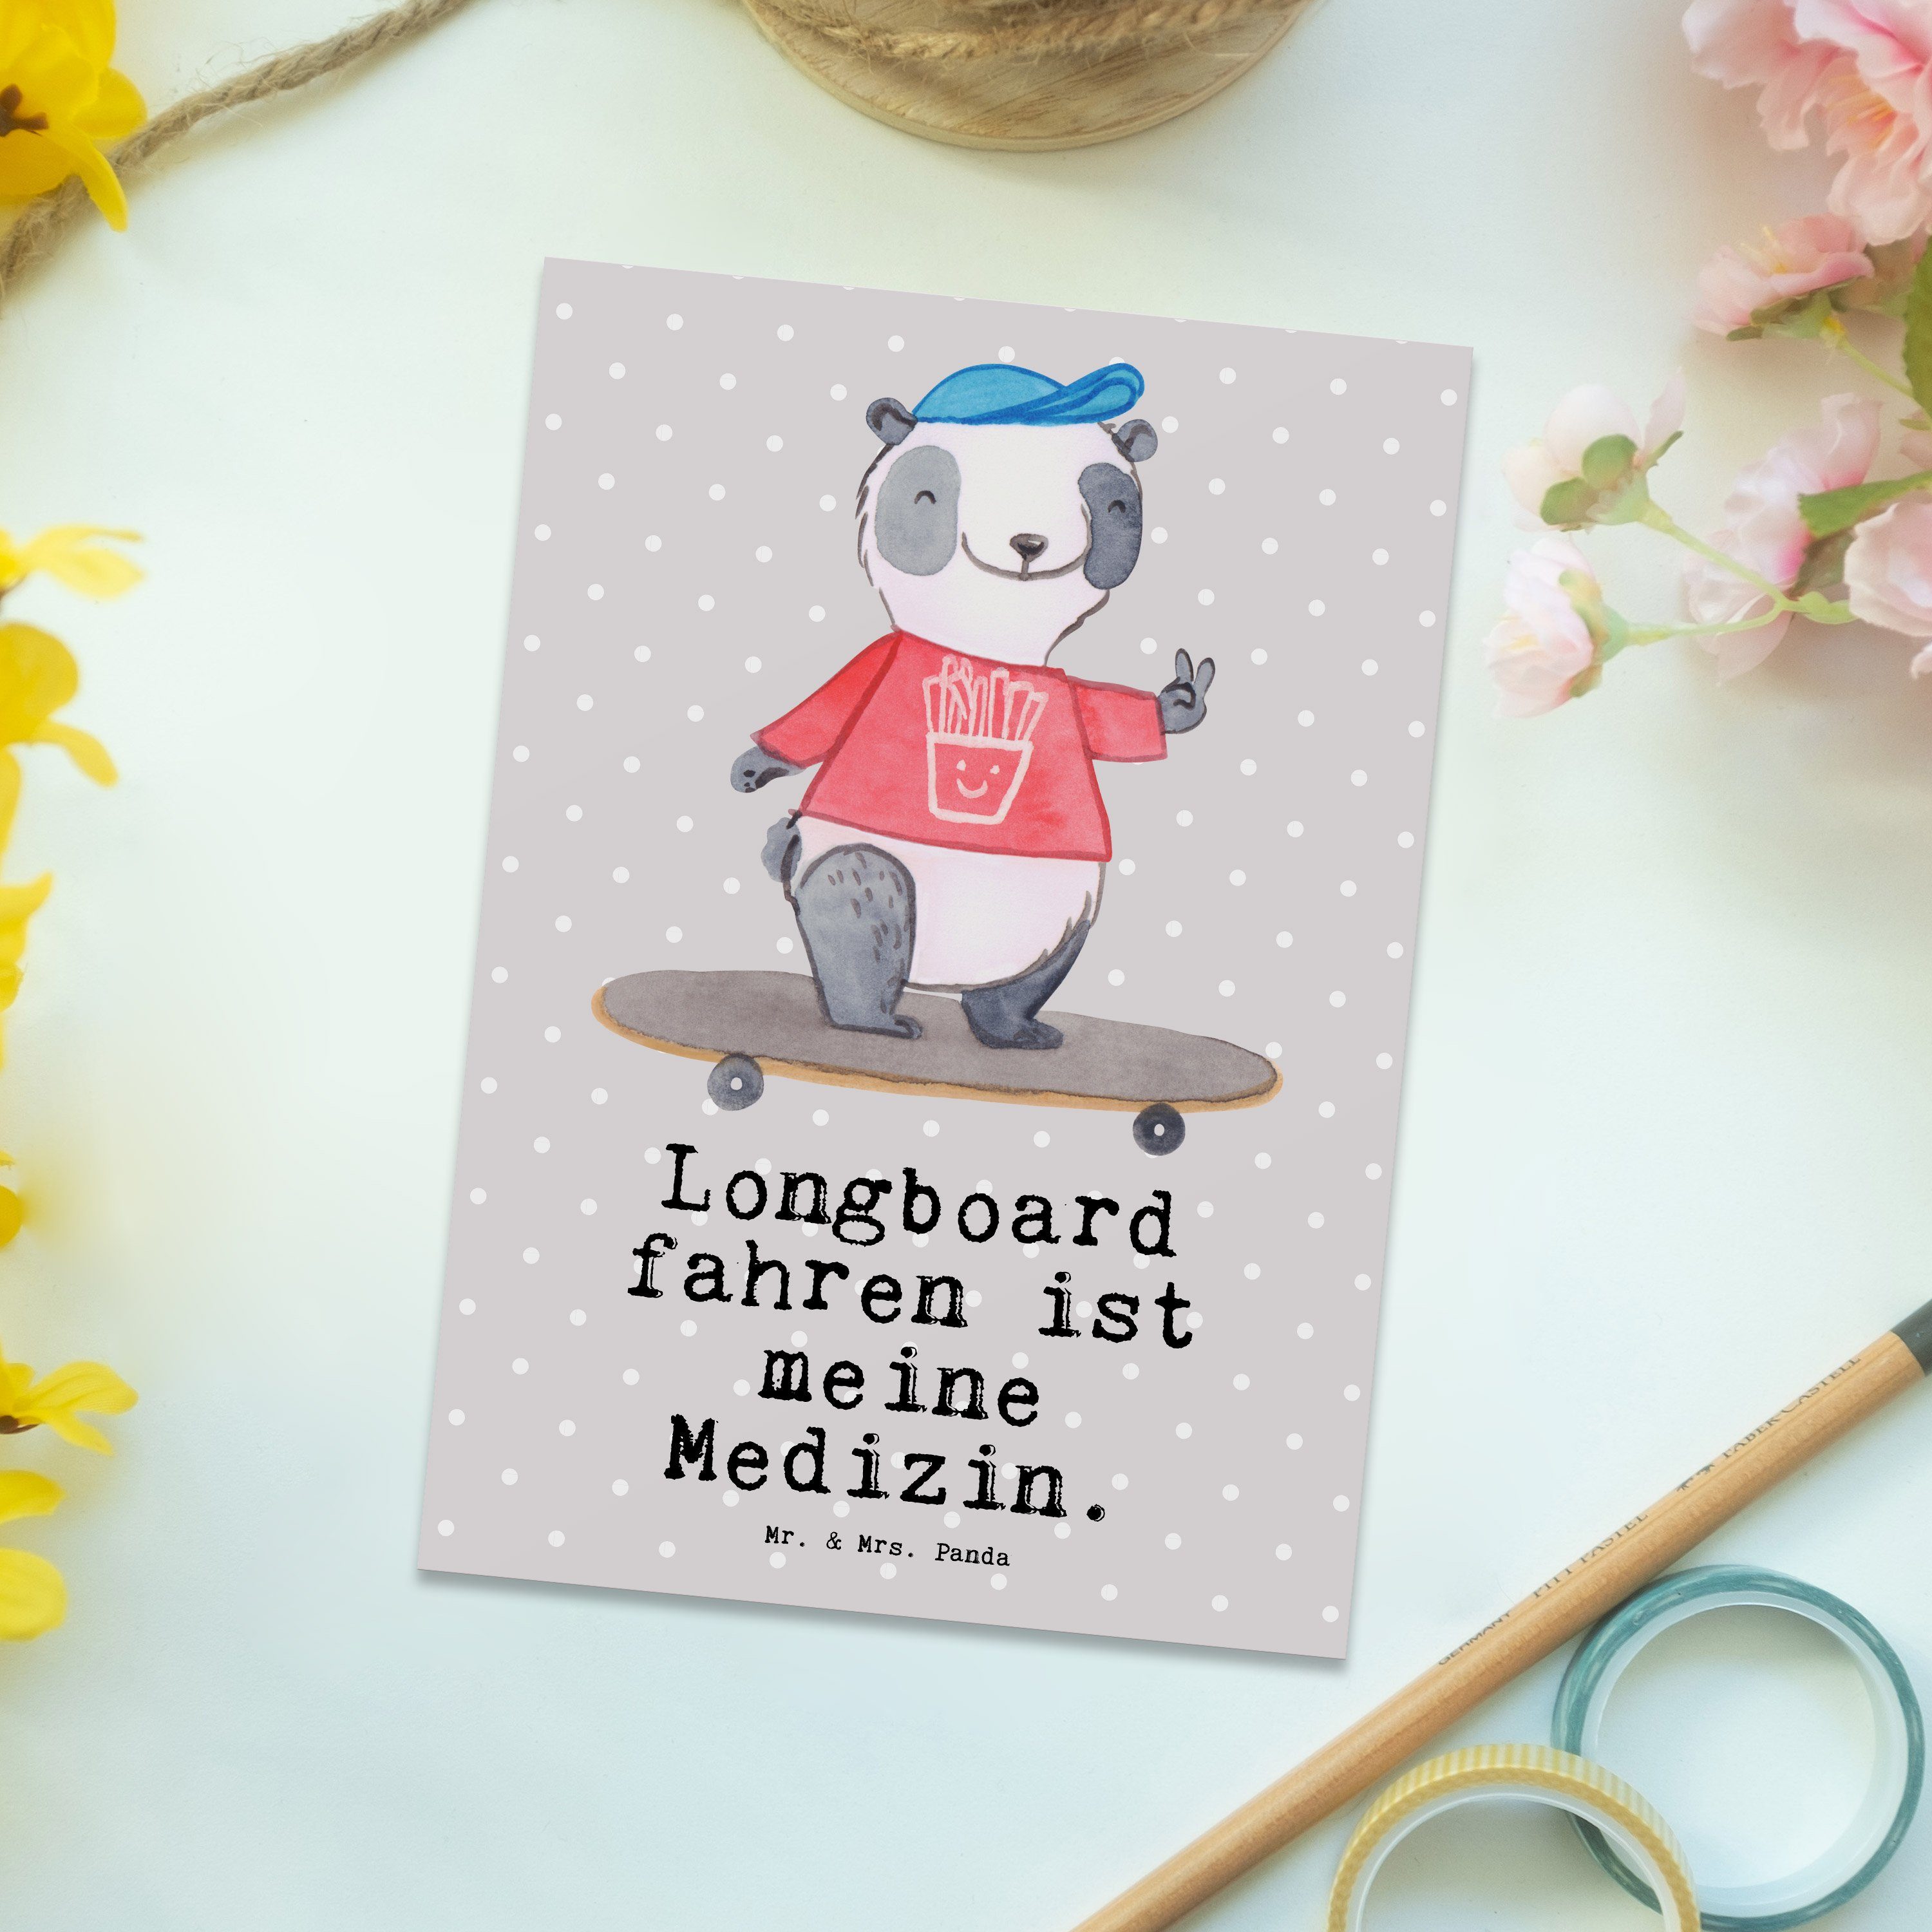 Mr. & Mrs. Skat Panda fahren Medizin Longboard - Pastell Grau - Geschenk, Roller Panda Postkarte